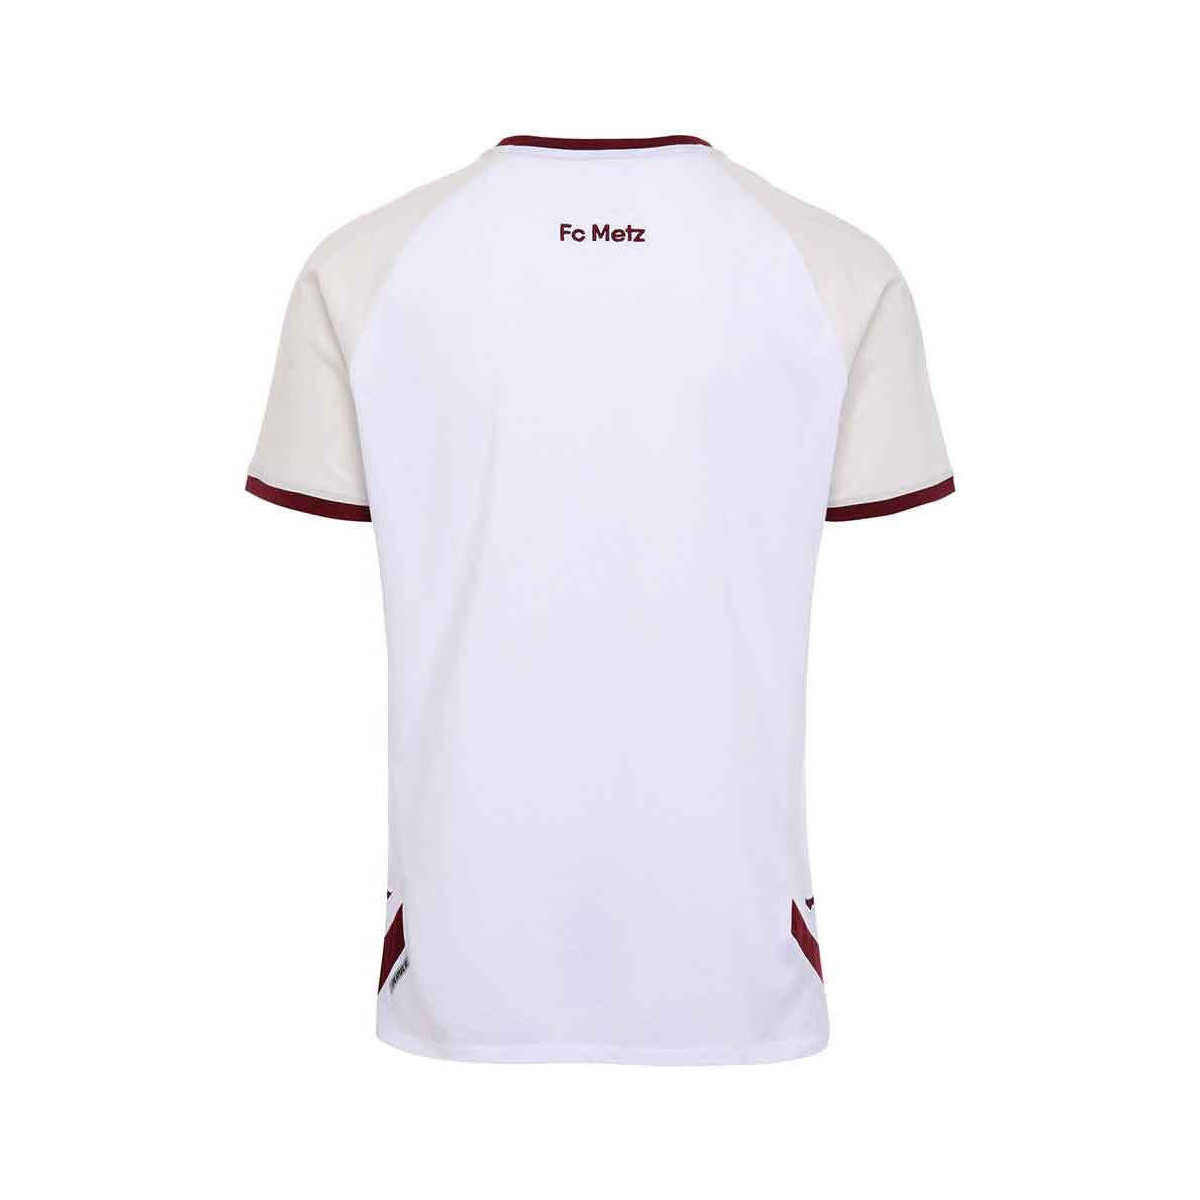 Kappa Blanc T-shirt Ayba 6 FC Metz 22/23 ZlW2RA5l